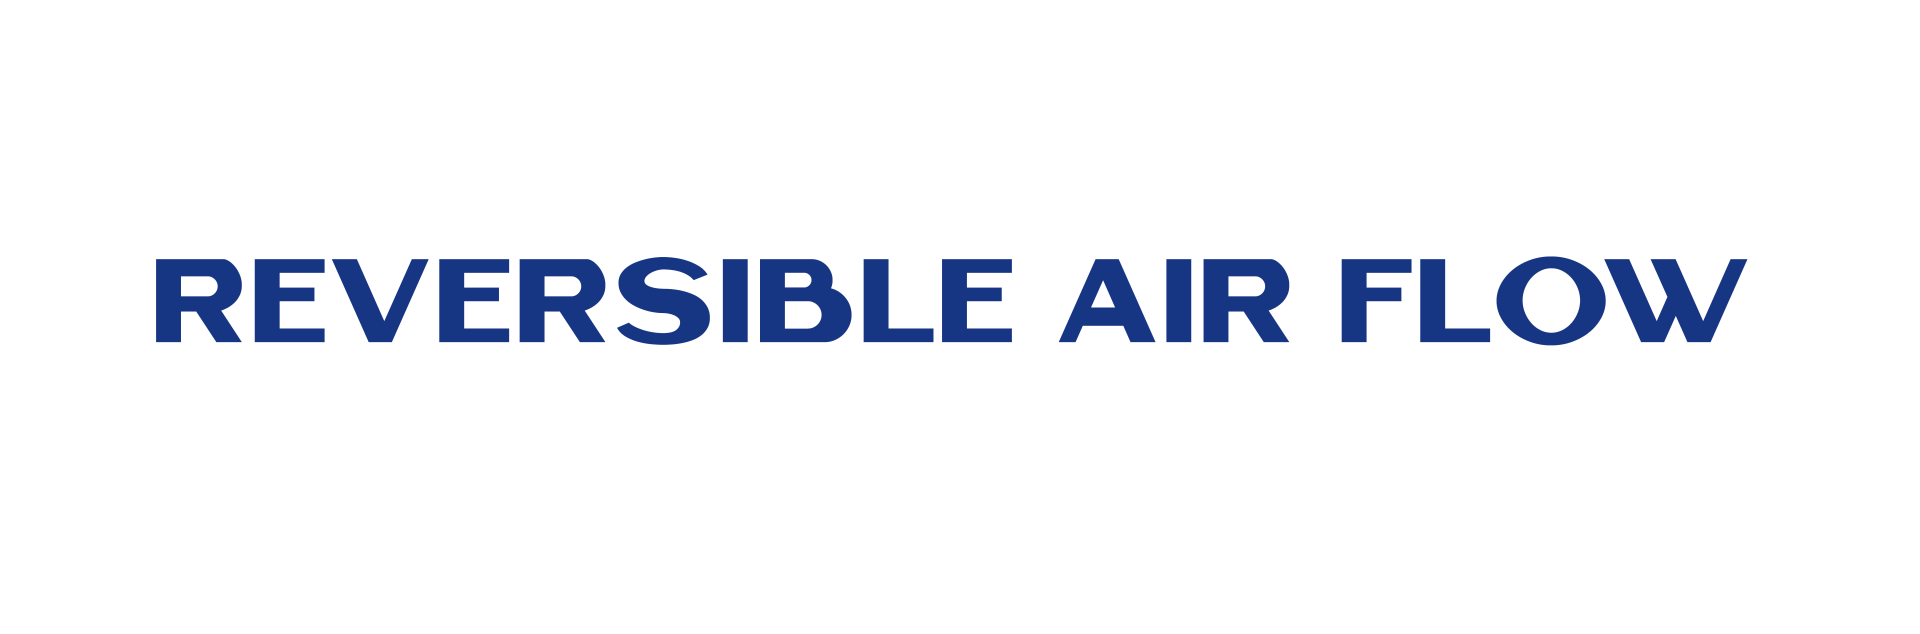 Reversible Air Flow Text